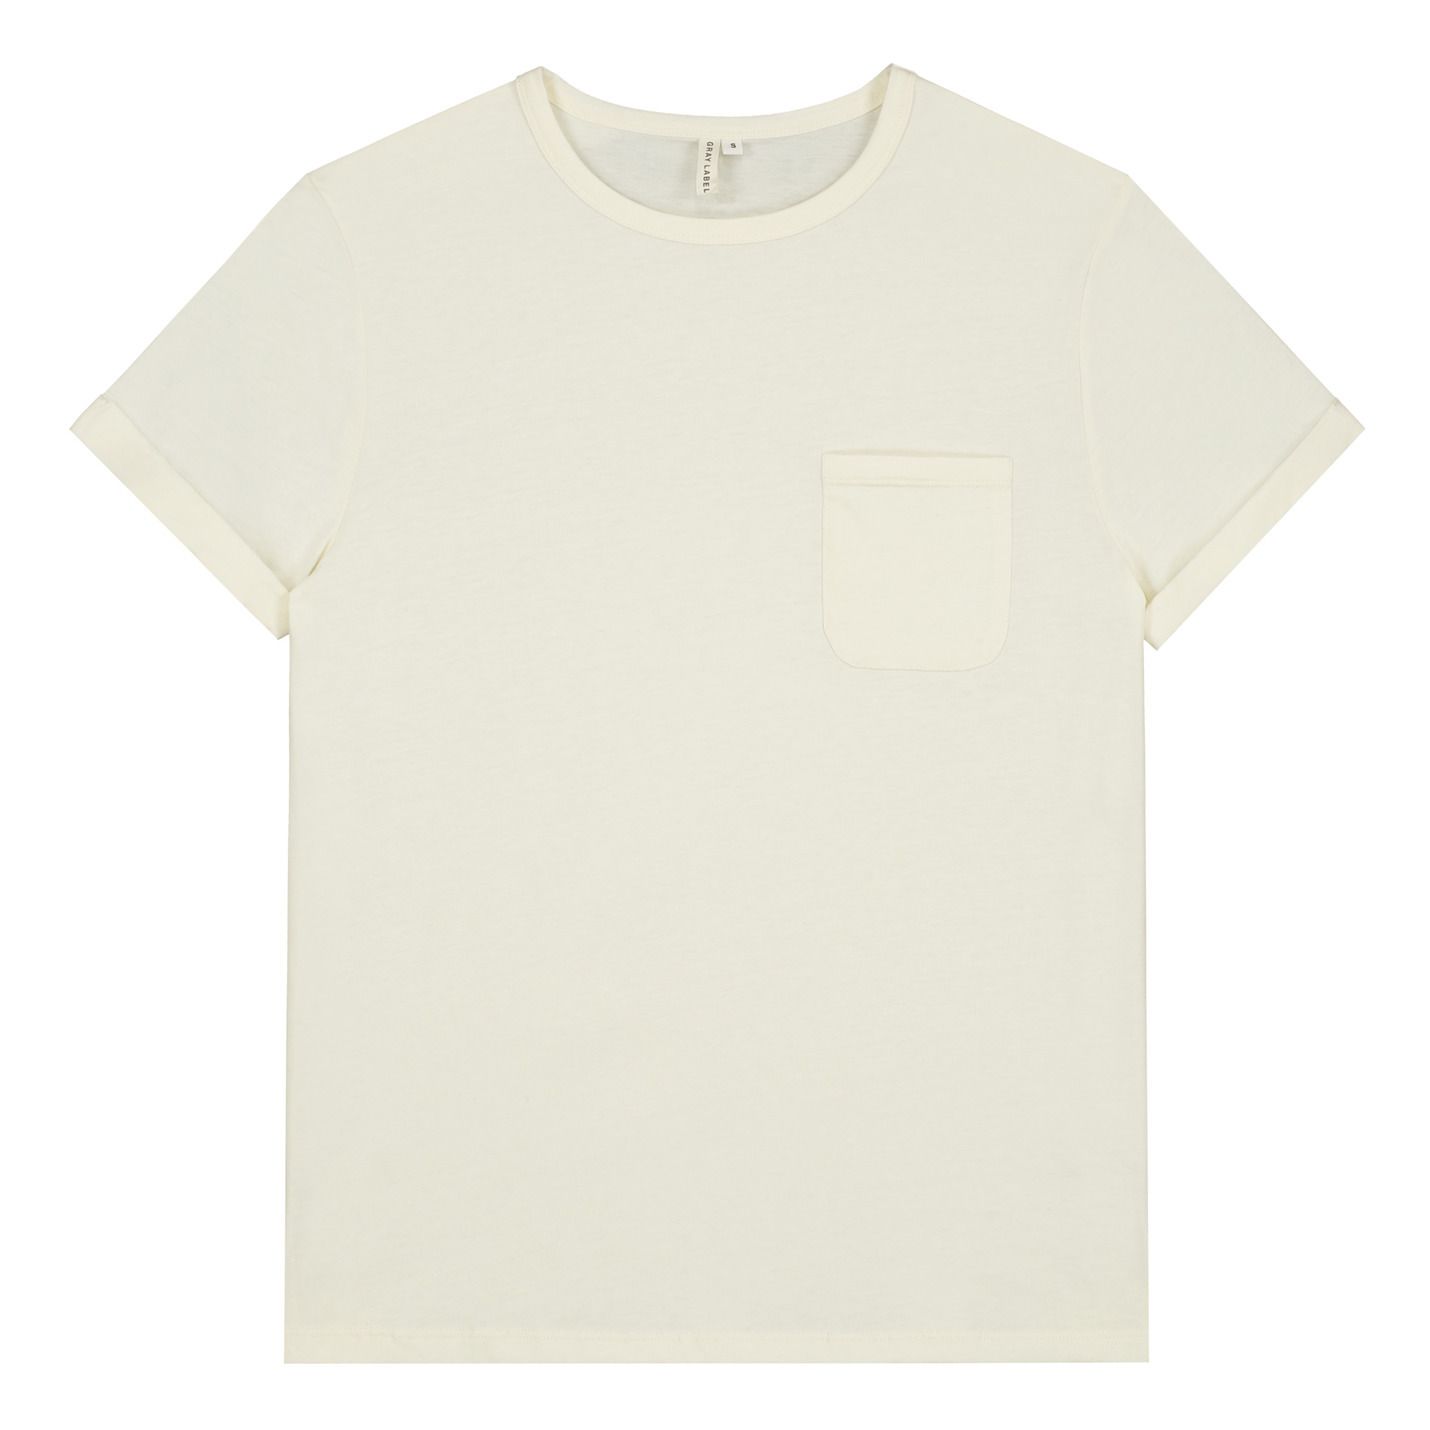 Gray Label - T-Shirt Coton Bio - Collection Adulte - - Femme -